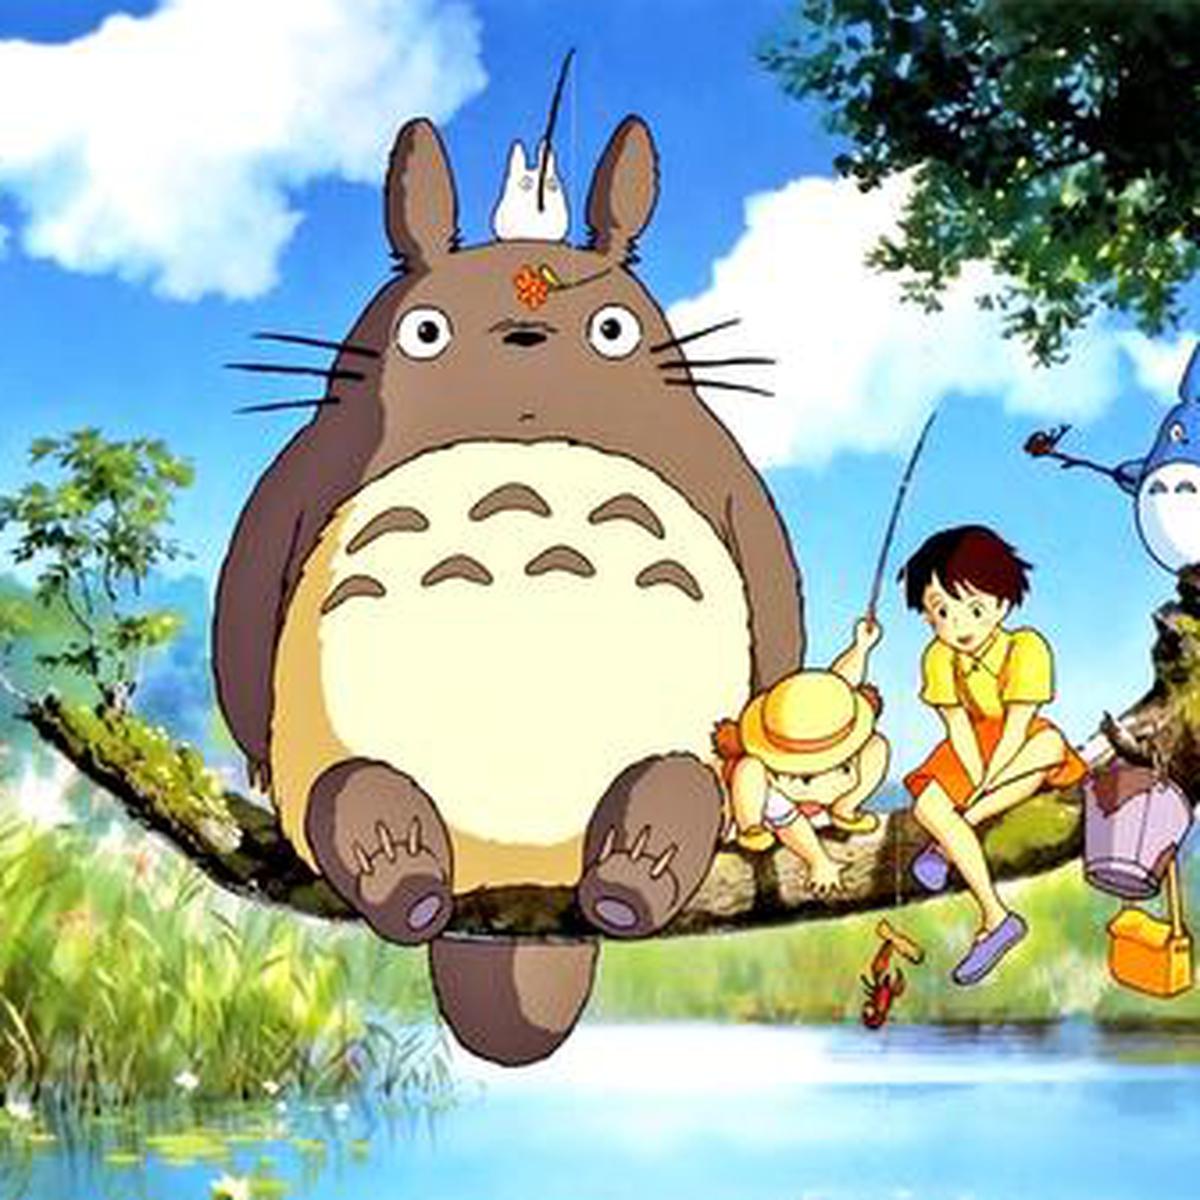 Suzume' movie review: Makoto Shinkai explores love and loss in breathless  road trip anime - The Hindu